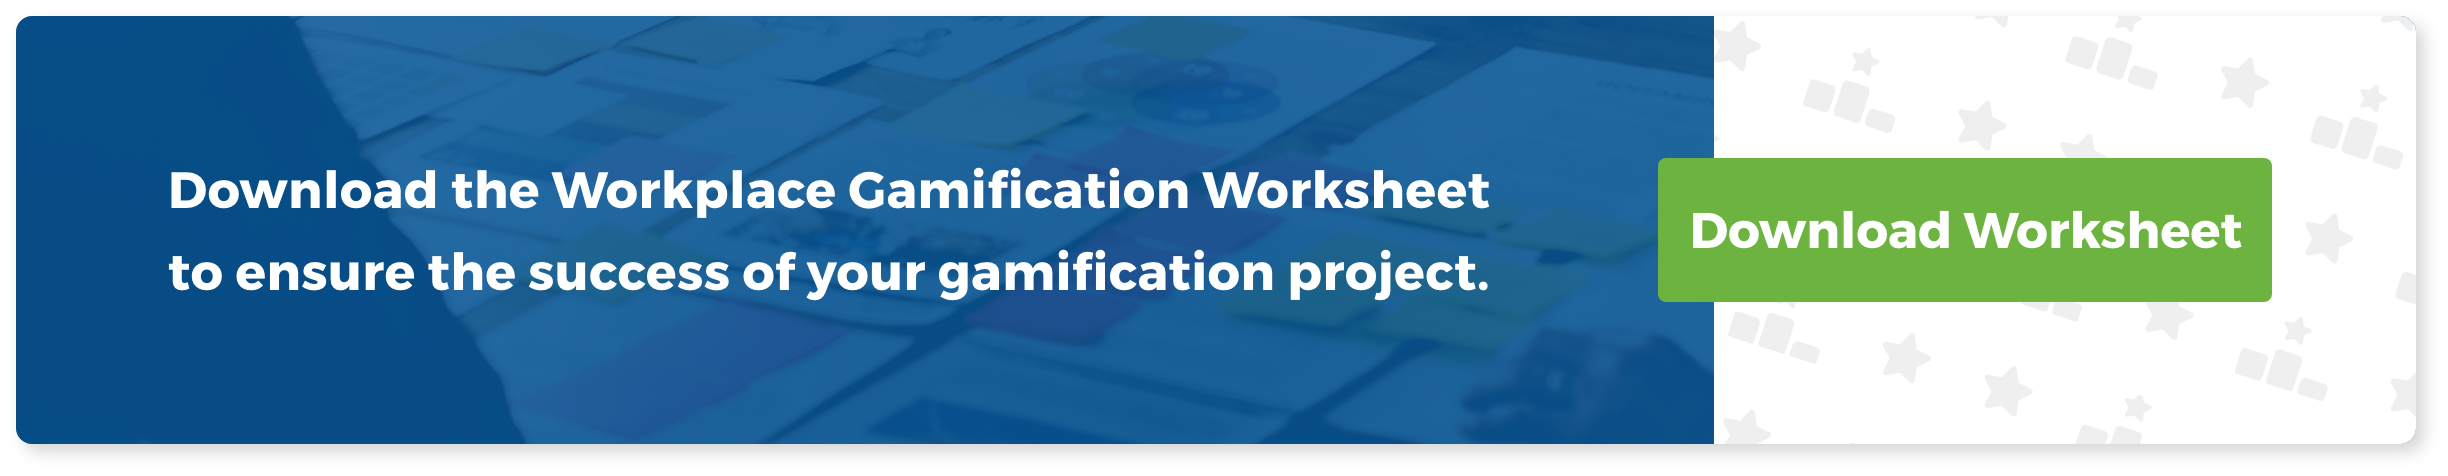 proliant-gamification-worksheet-download-cta